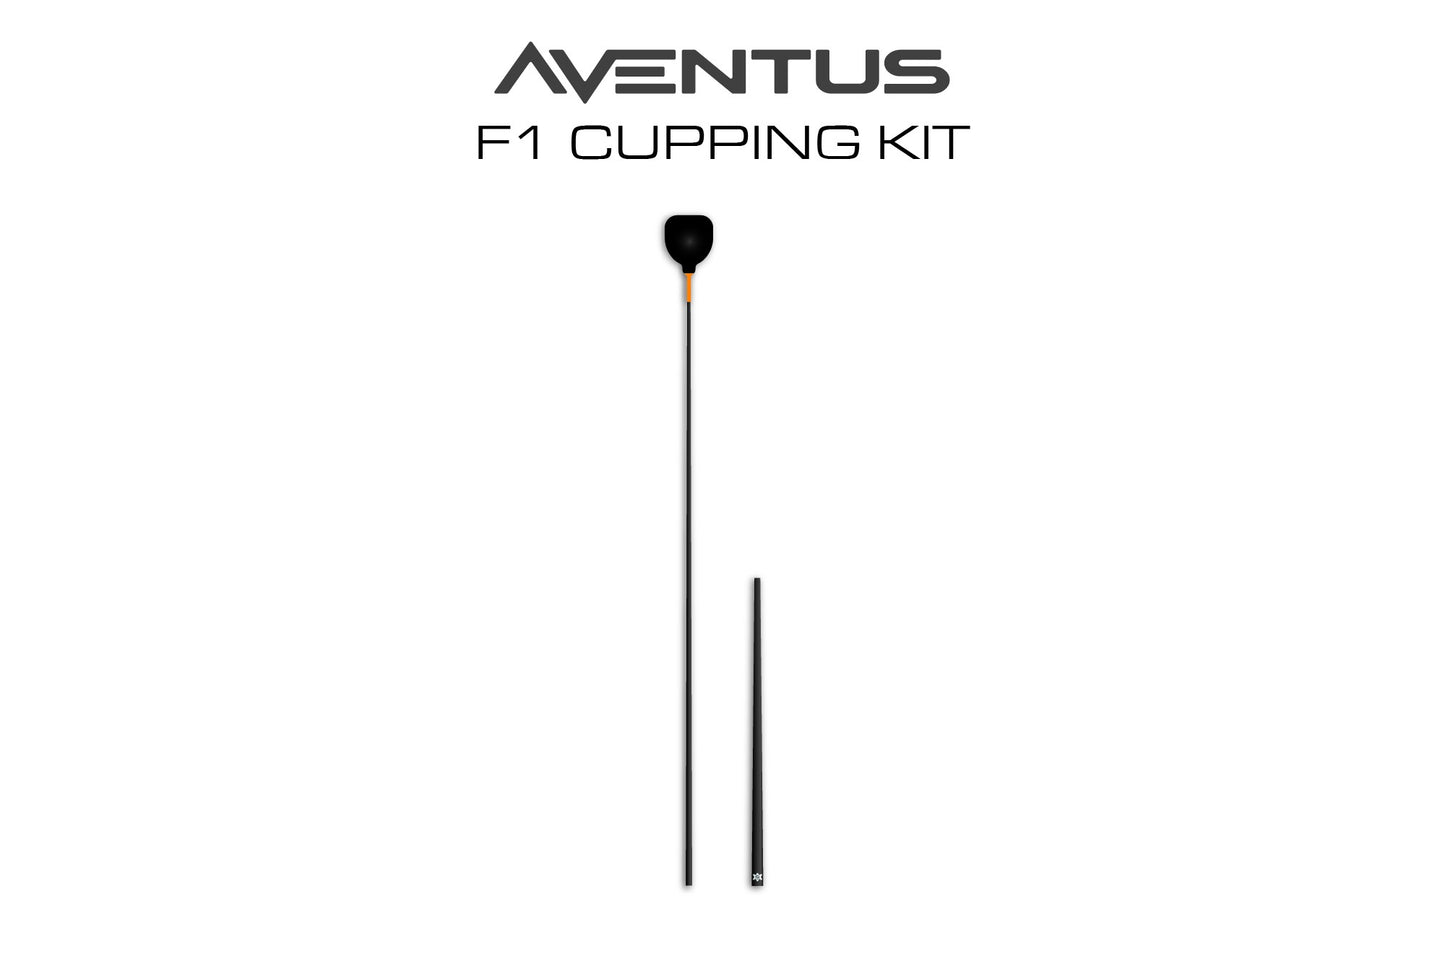 Aventus F1 Cupping Kit